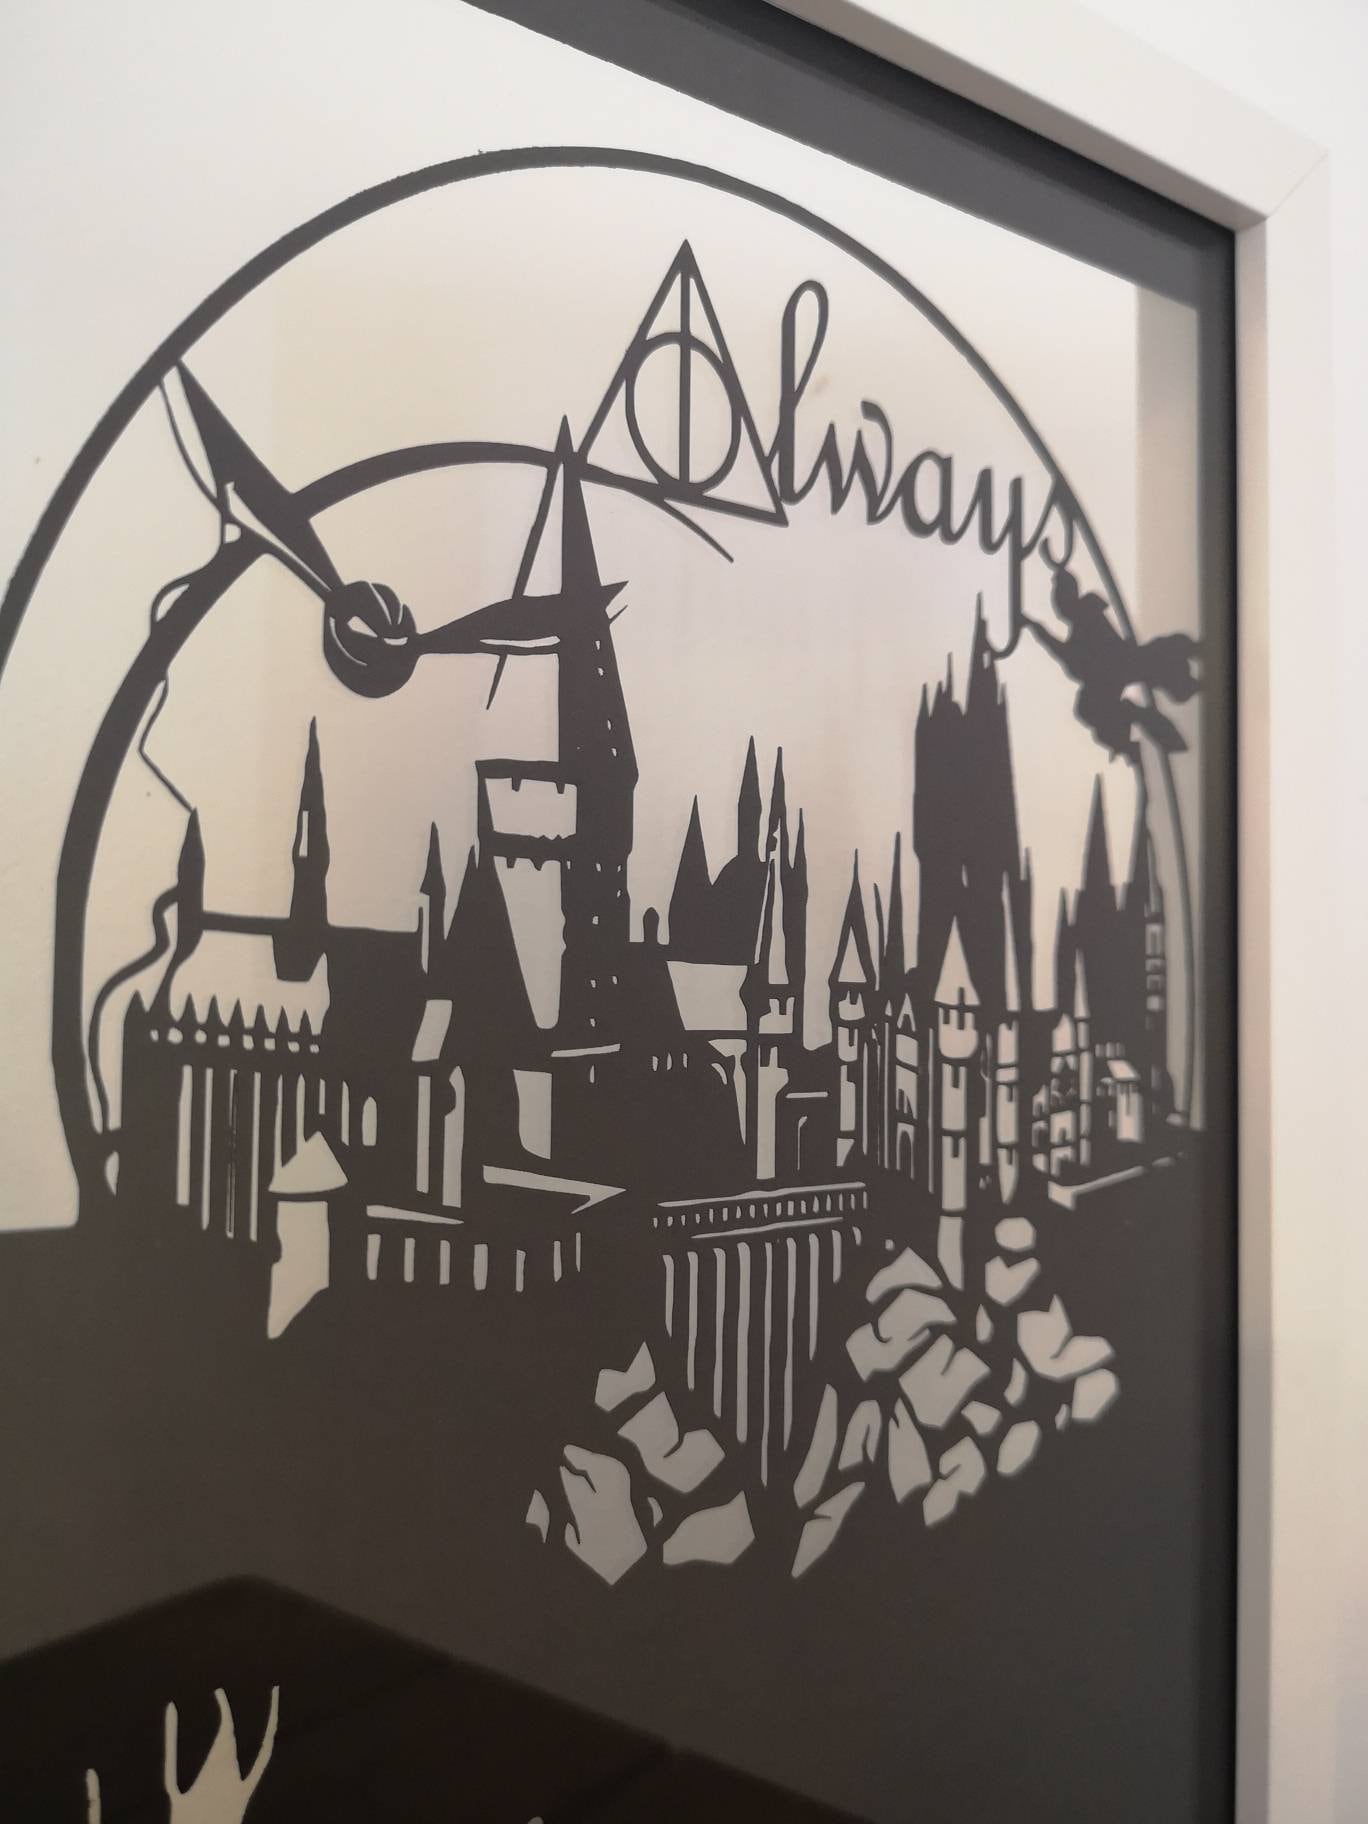 Harry Potter Paper Silhouette Pictures - FeltMagnet